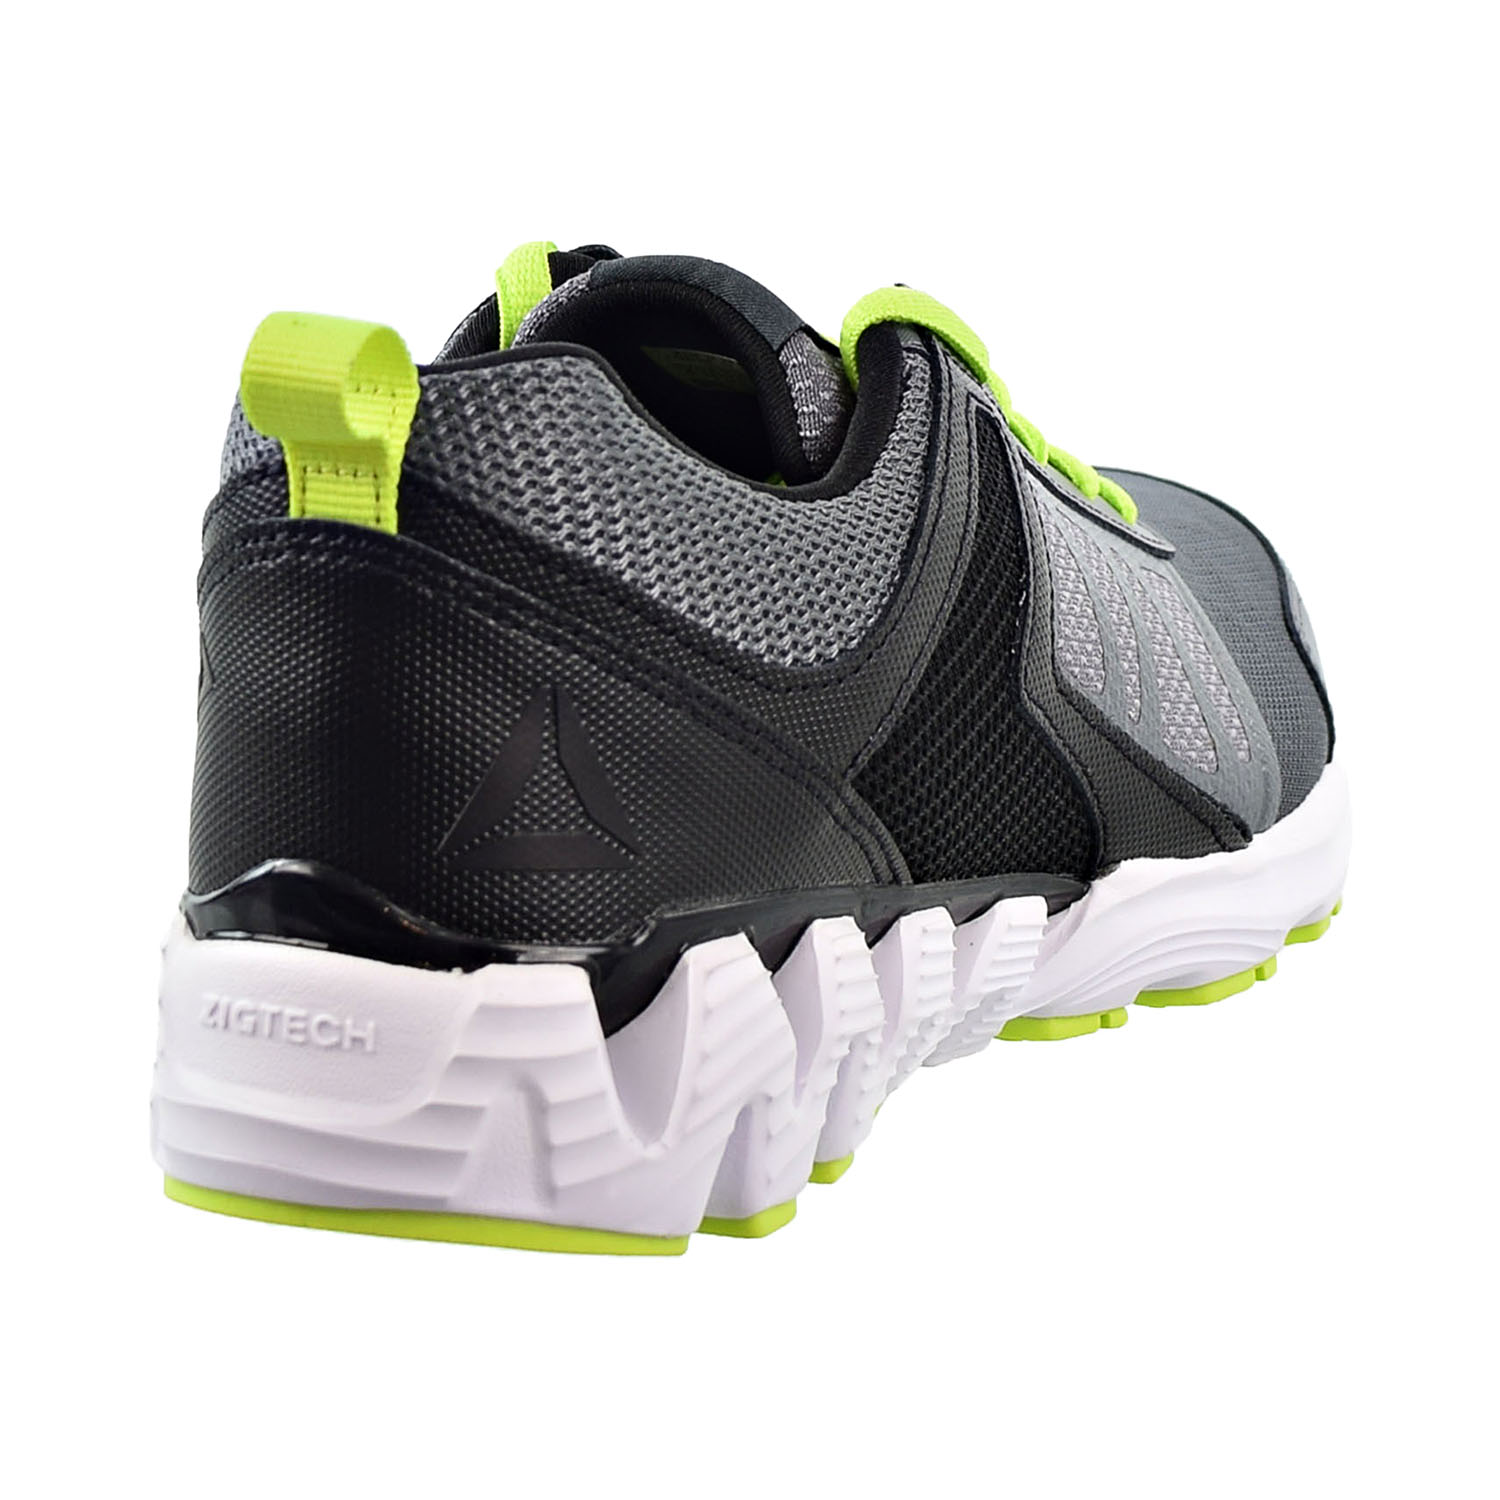 Reebok Zig Kick 2018 Big Kids Shoes Alloy/Black/Neon Lime cn7759 - image 3 of 6